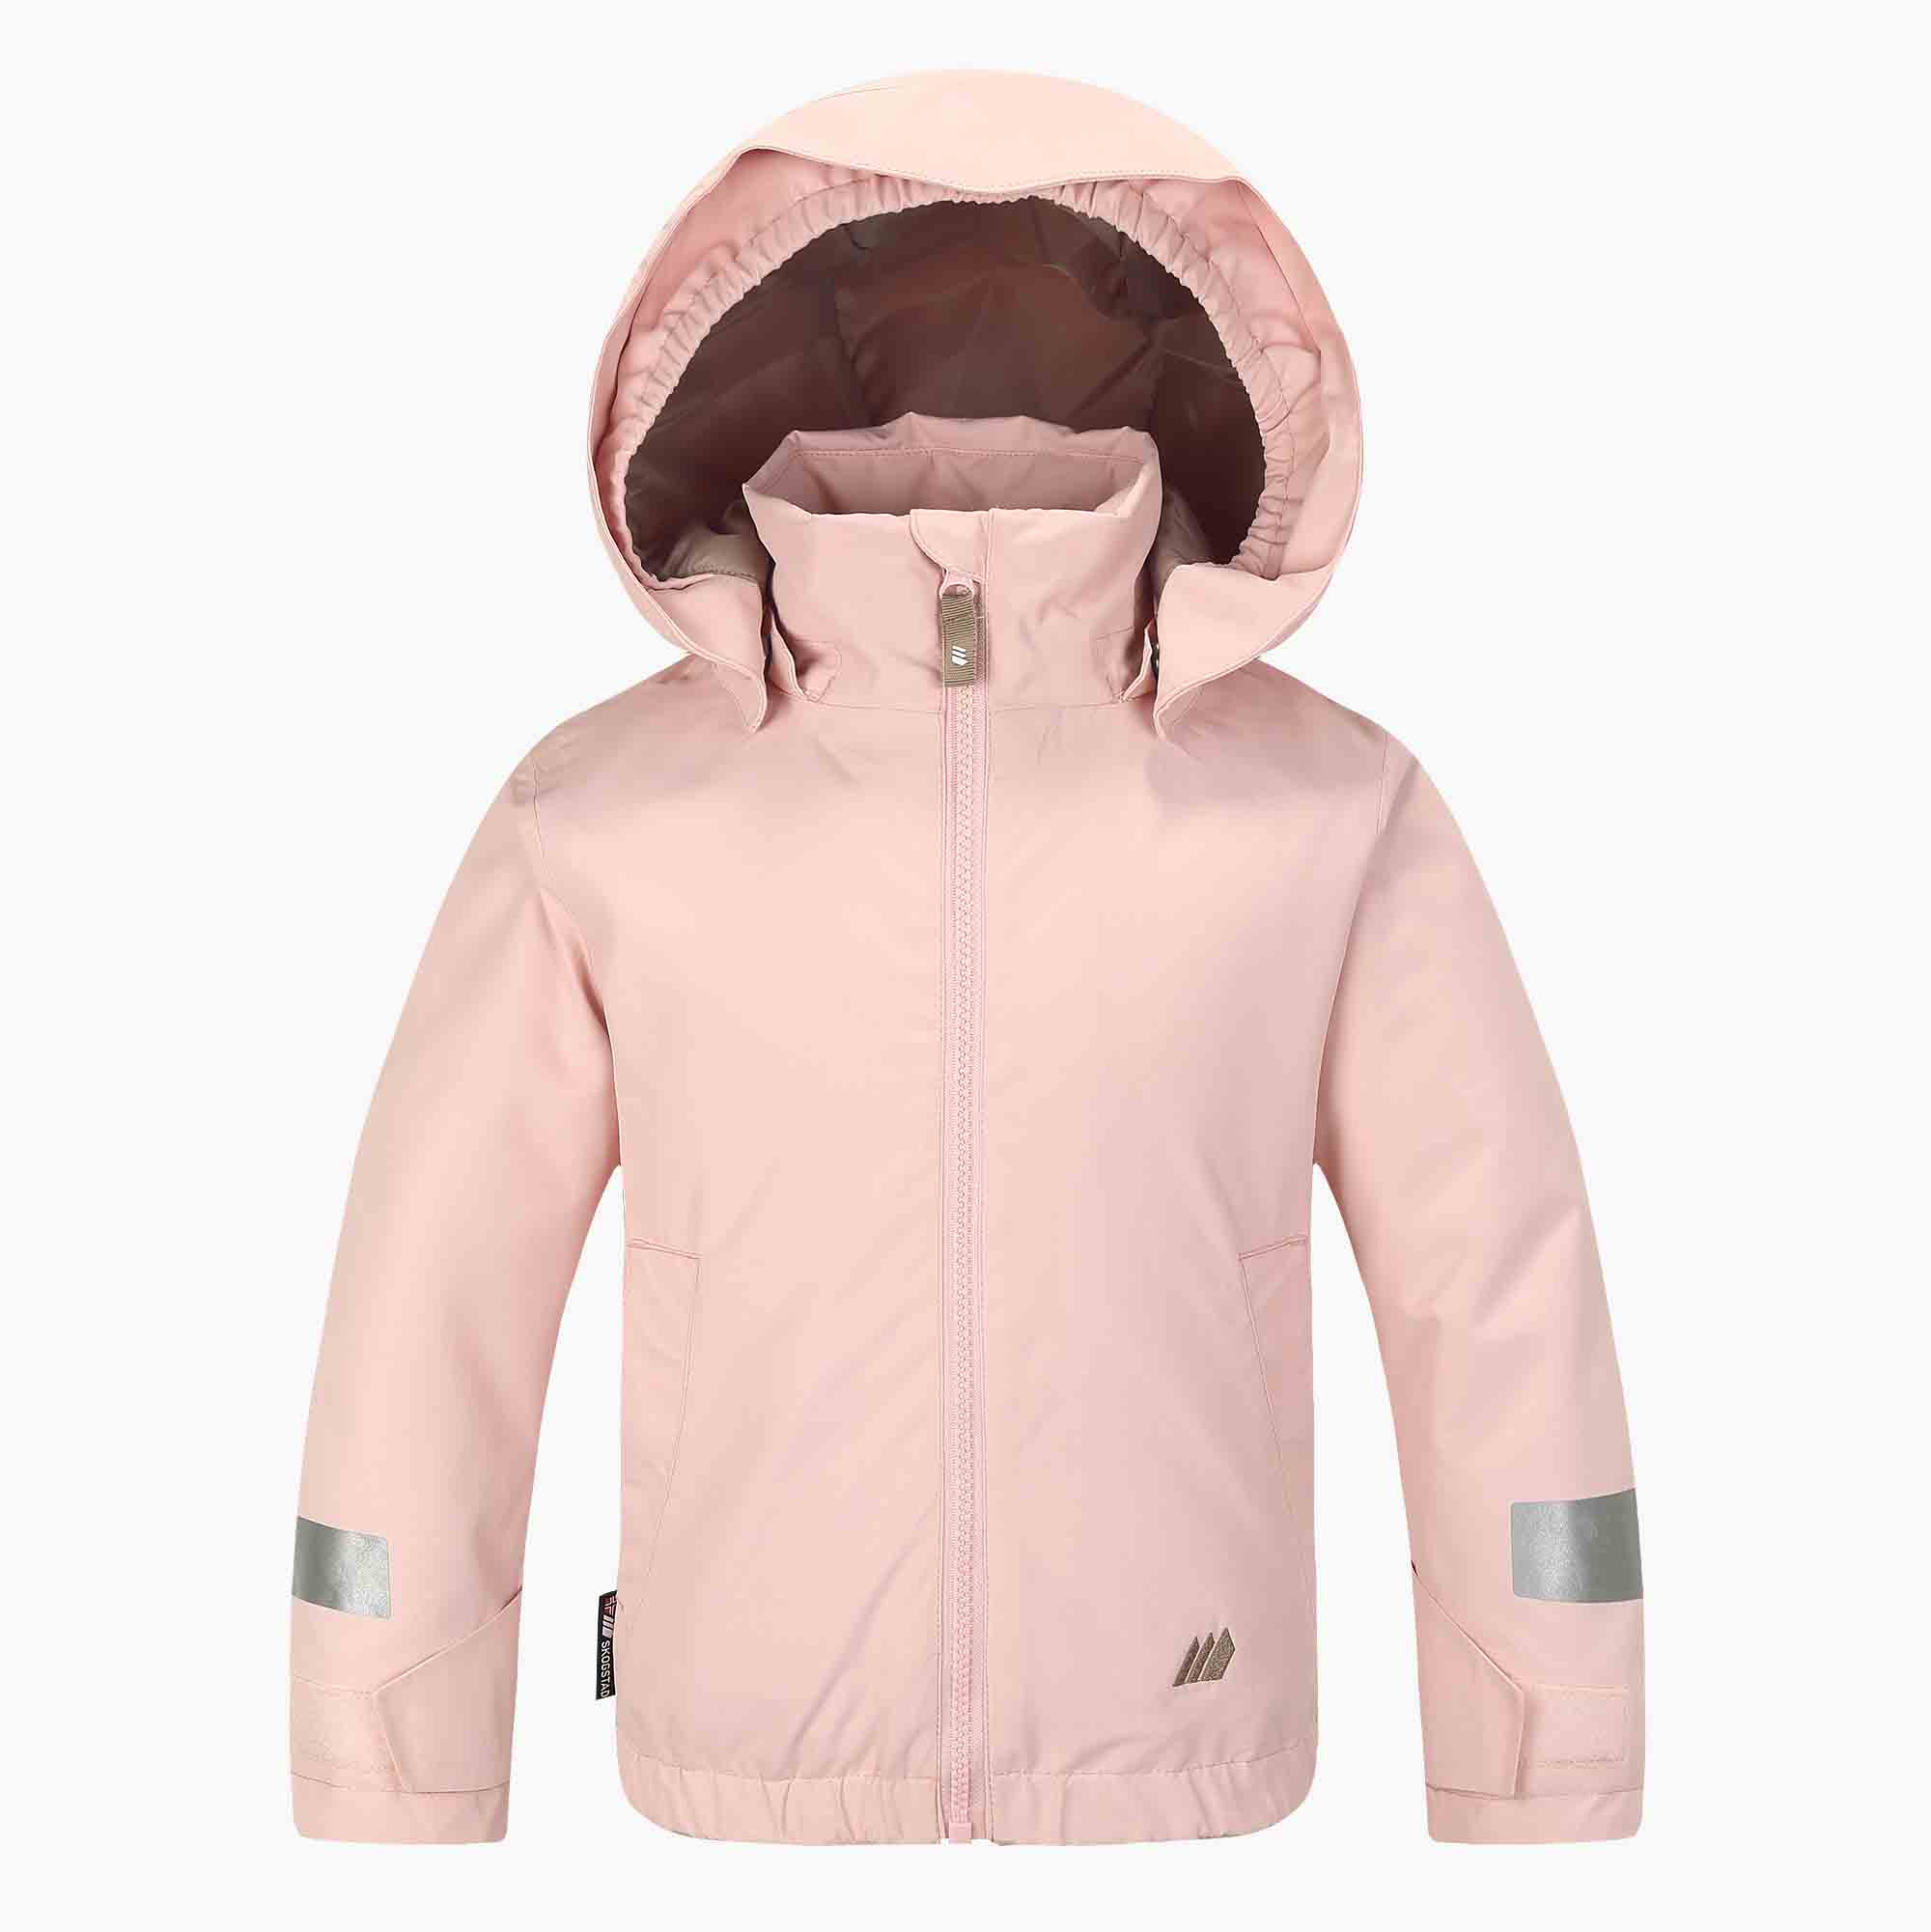 Younger kids' winter jacket from Skogstad Bjørndalen